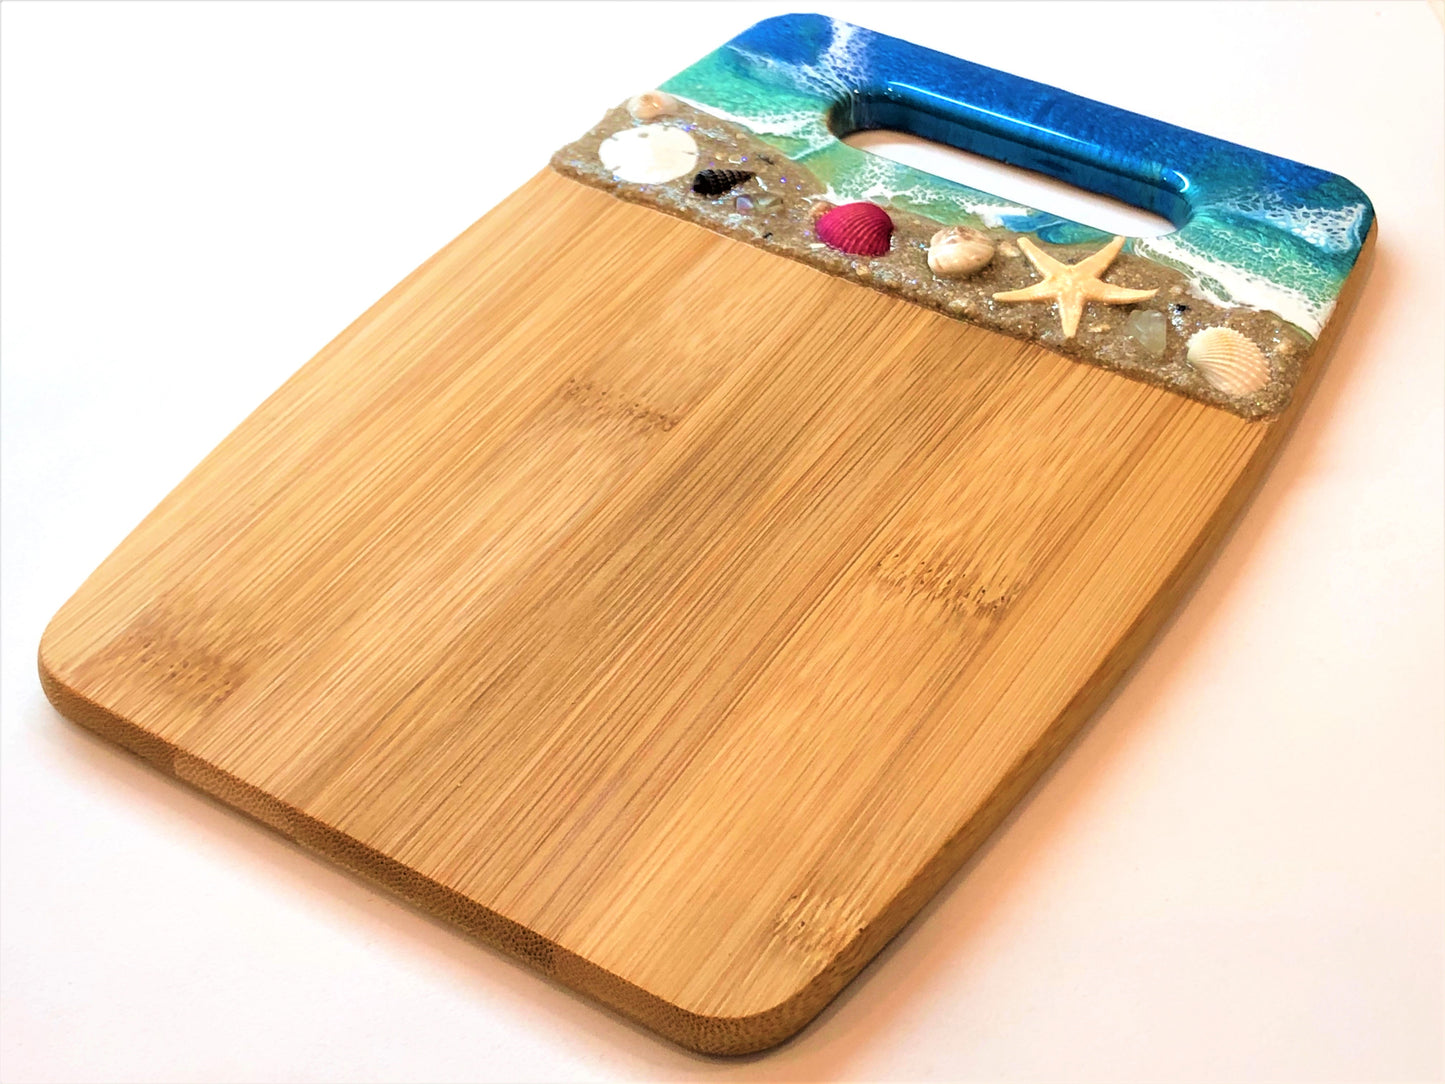 Cutting Board Small #1 - Bamboo with Beach Scene